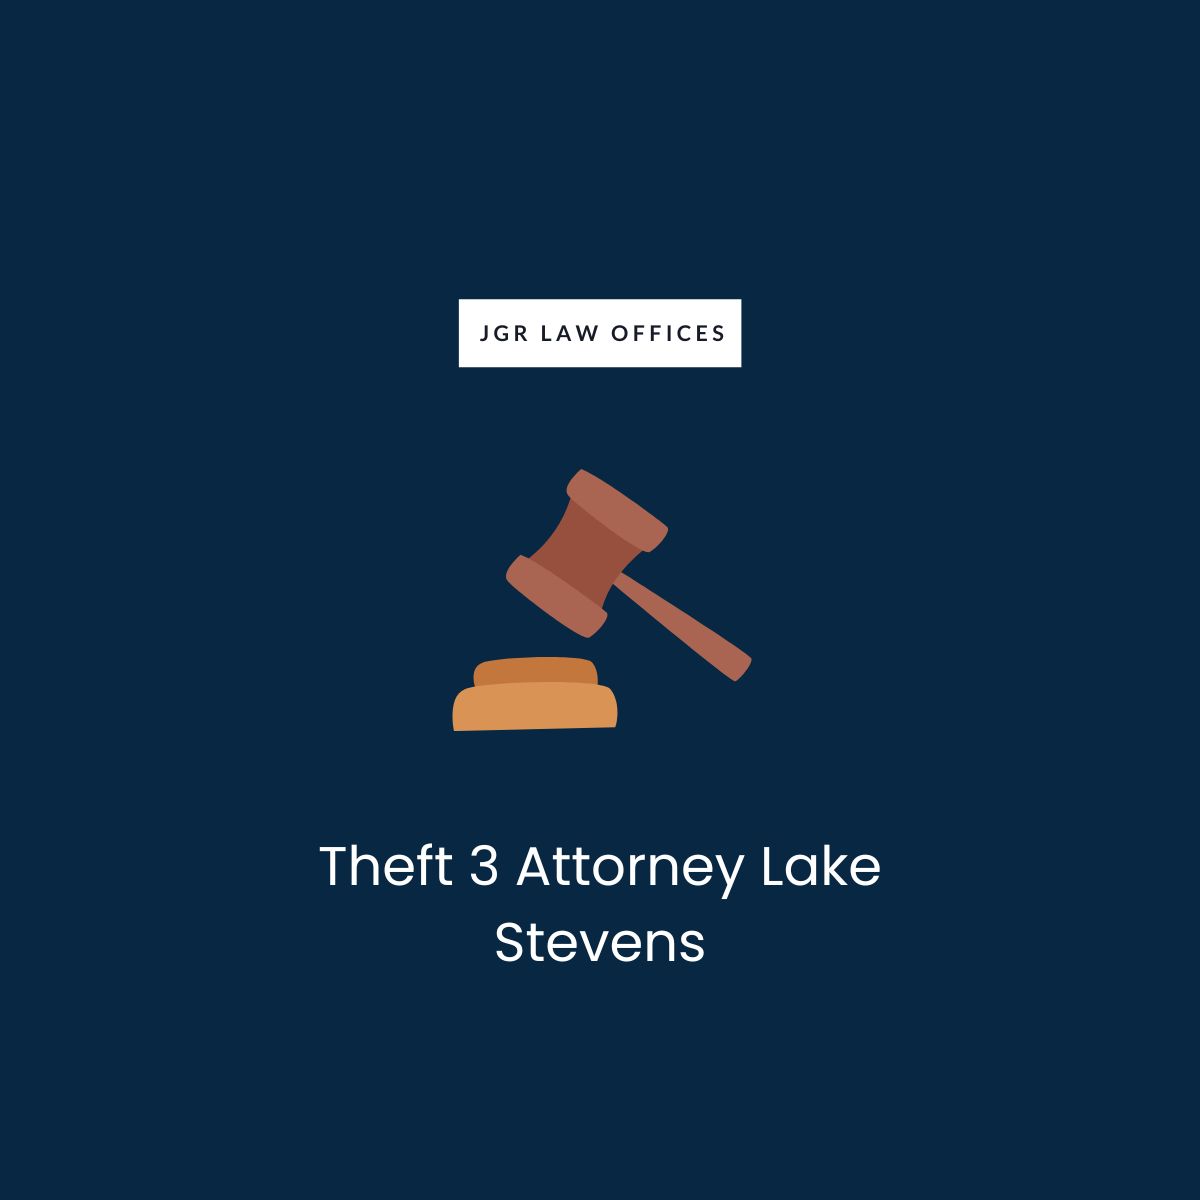 Theft 3 Attorney Lake Stevens